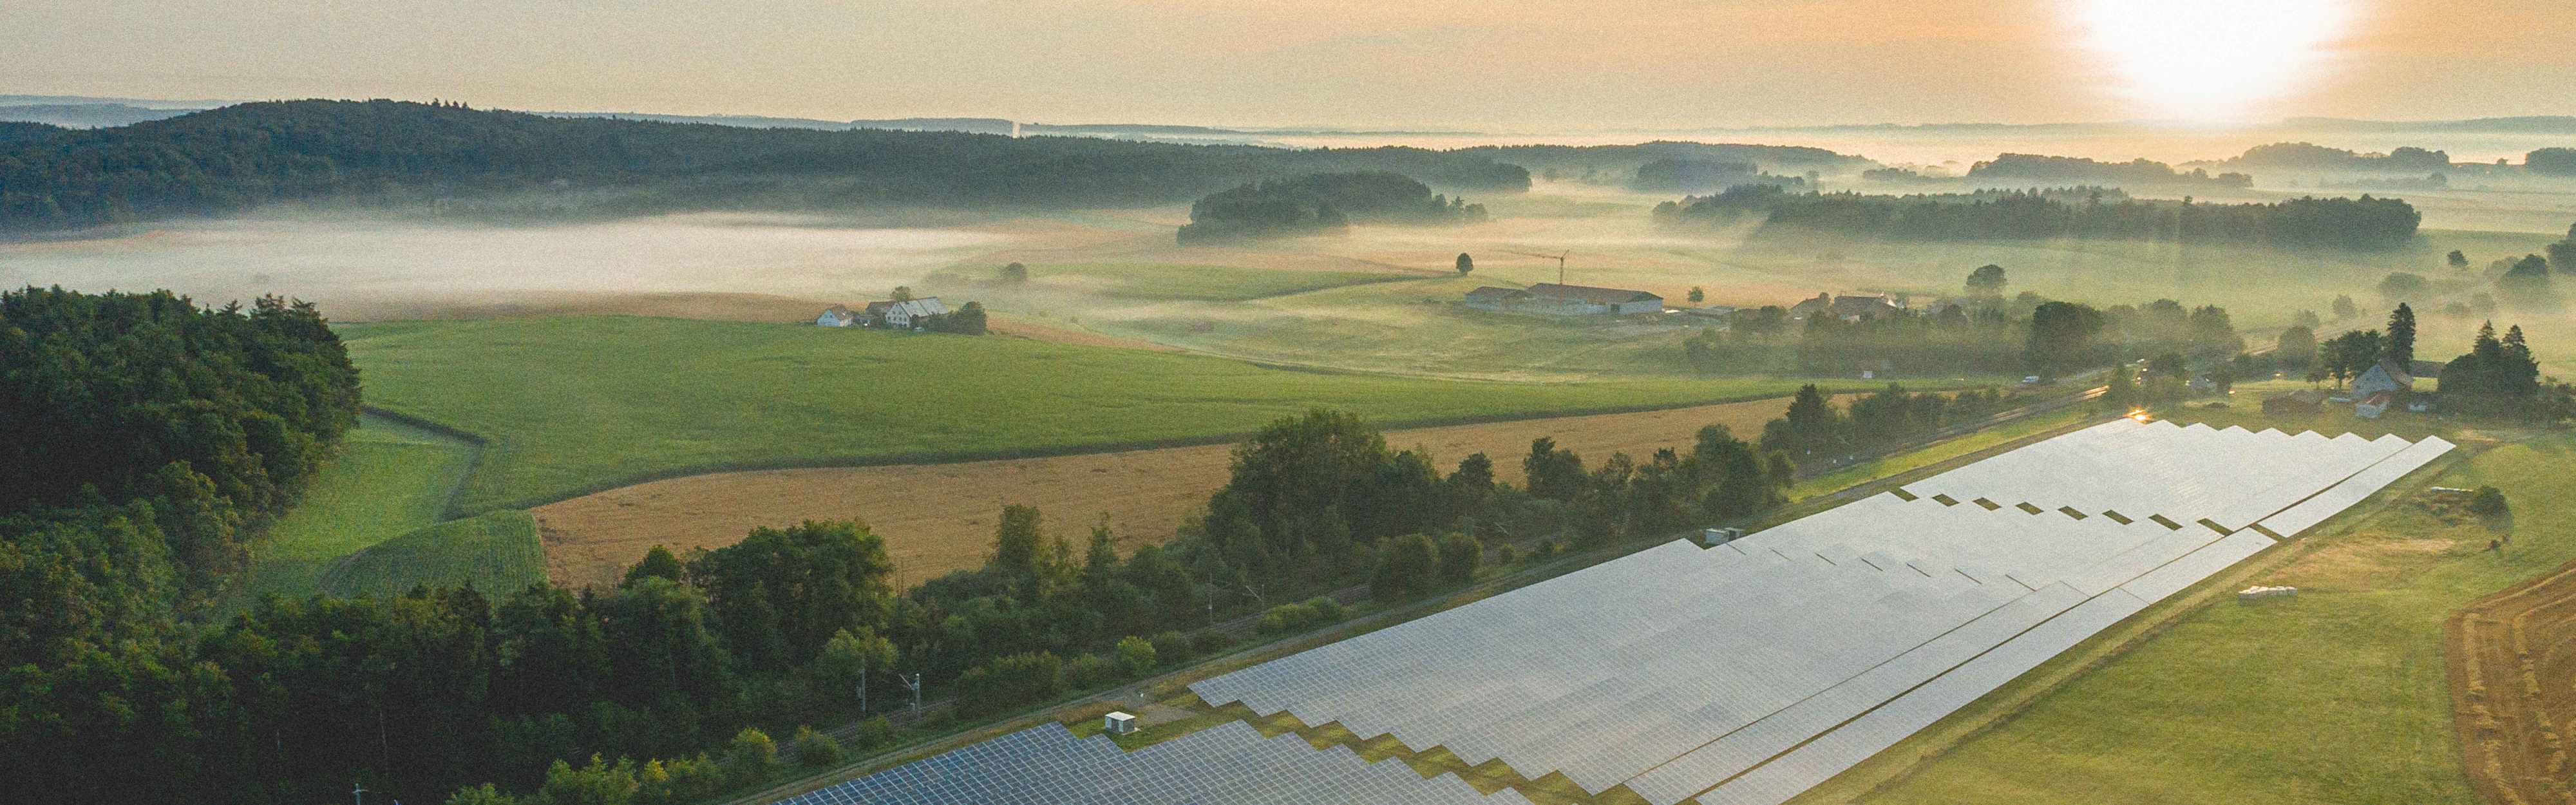 EnBW Solarpark in Ingoldingen